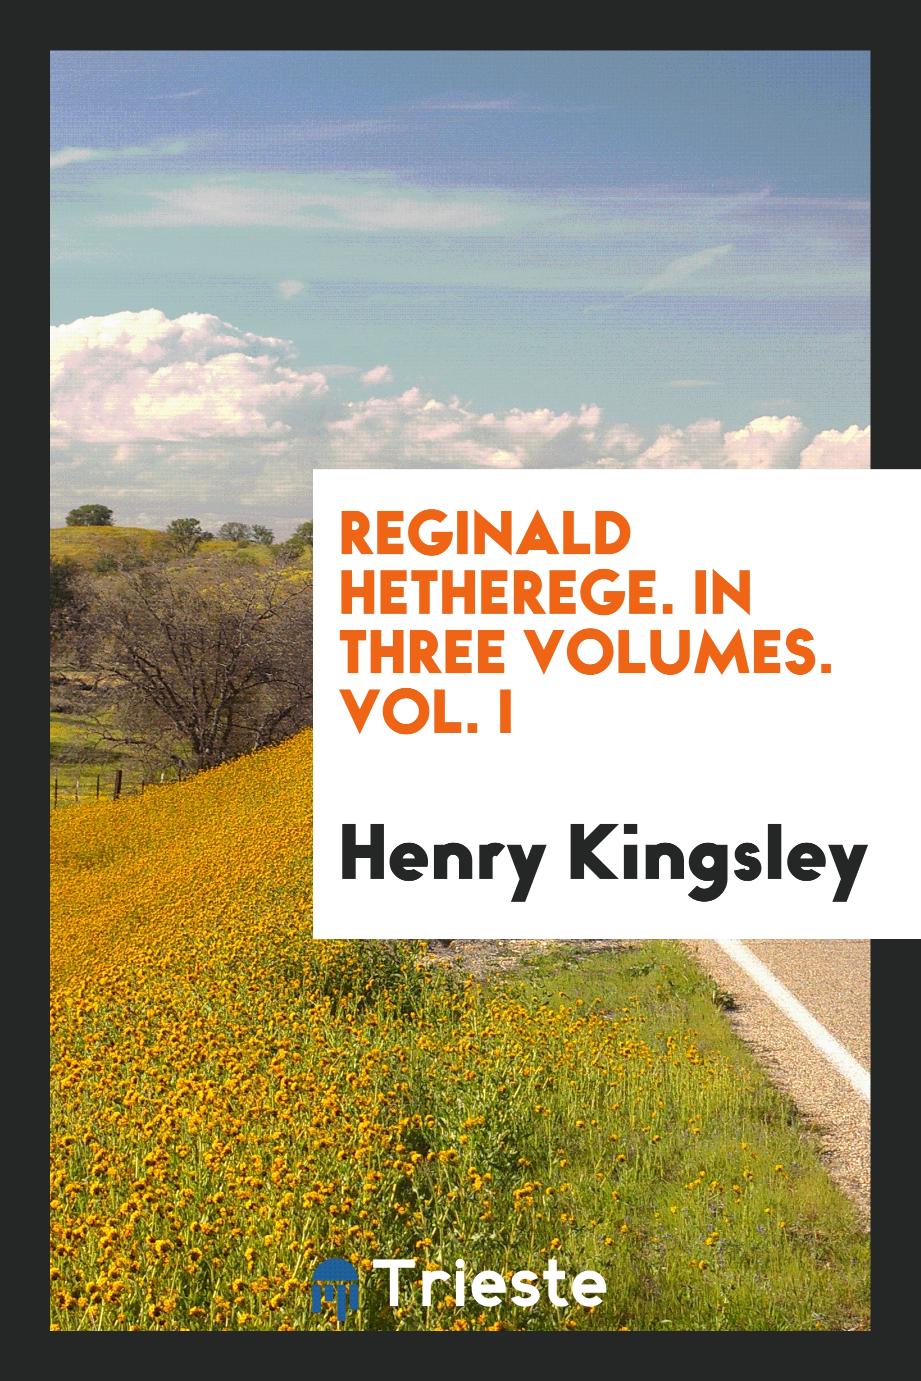 Reginald Hetherege. In three volumes. Vol. I